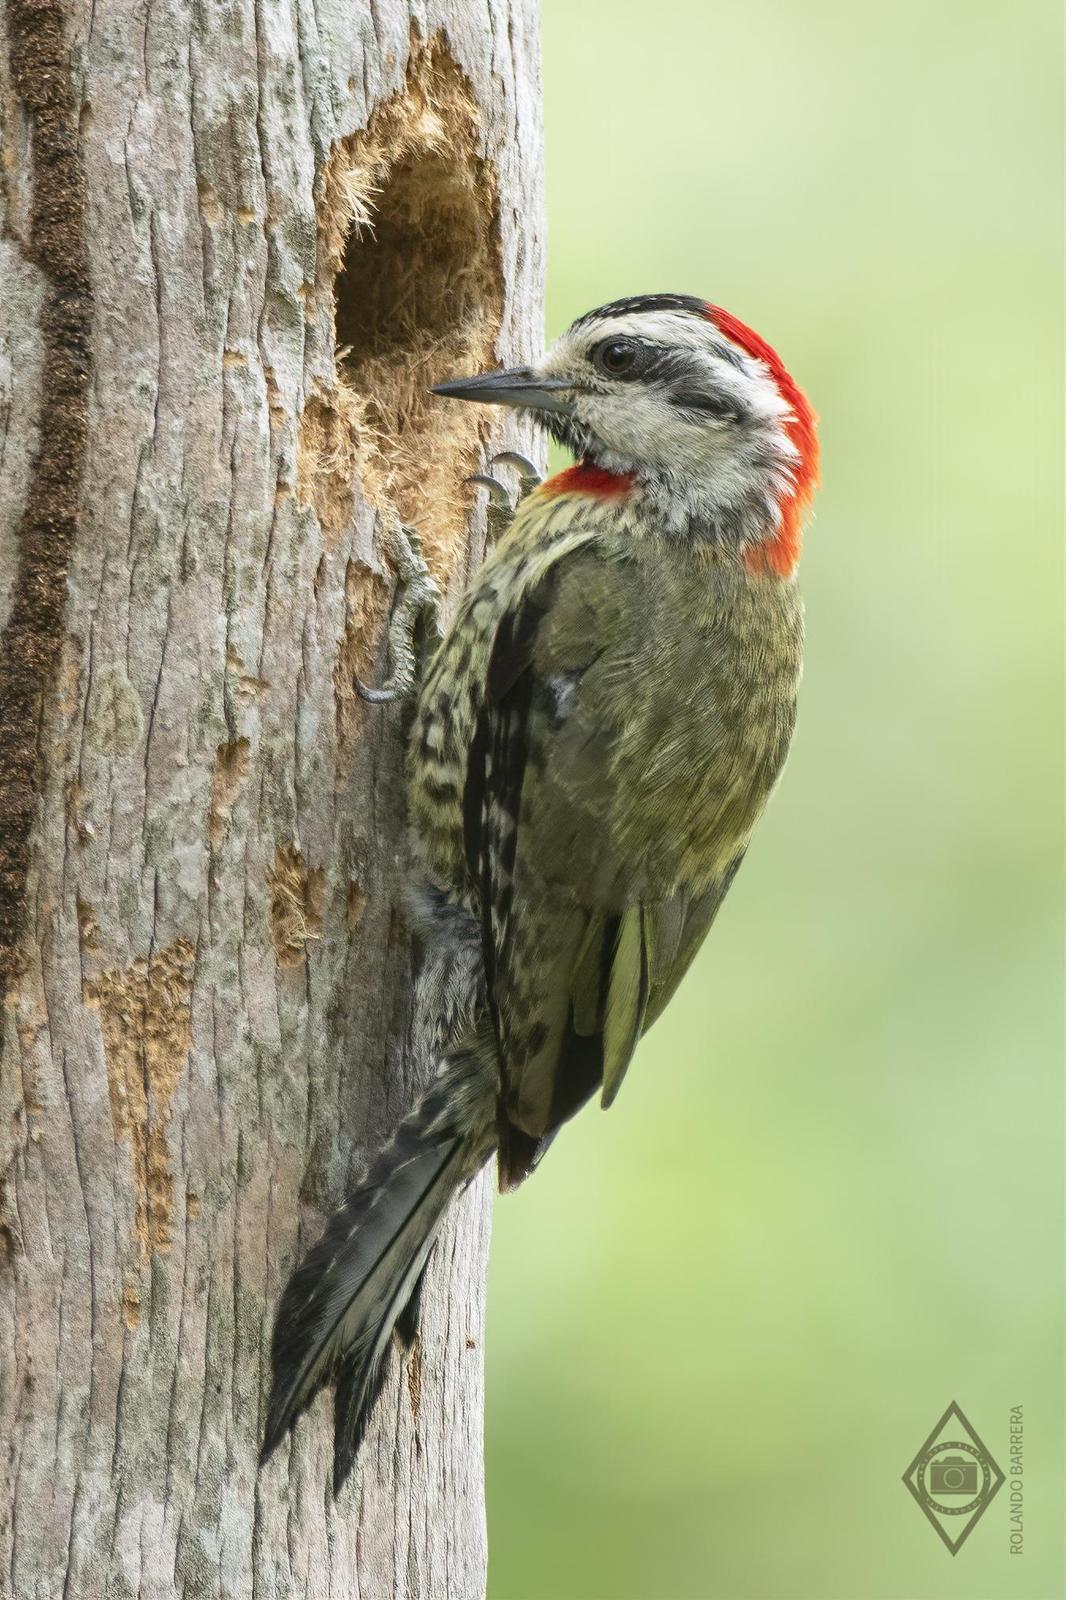 Cuban Green Woodpecker Photo by Rolando Barrera